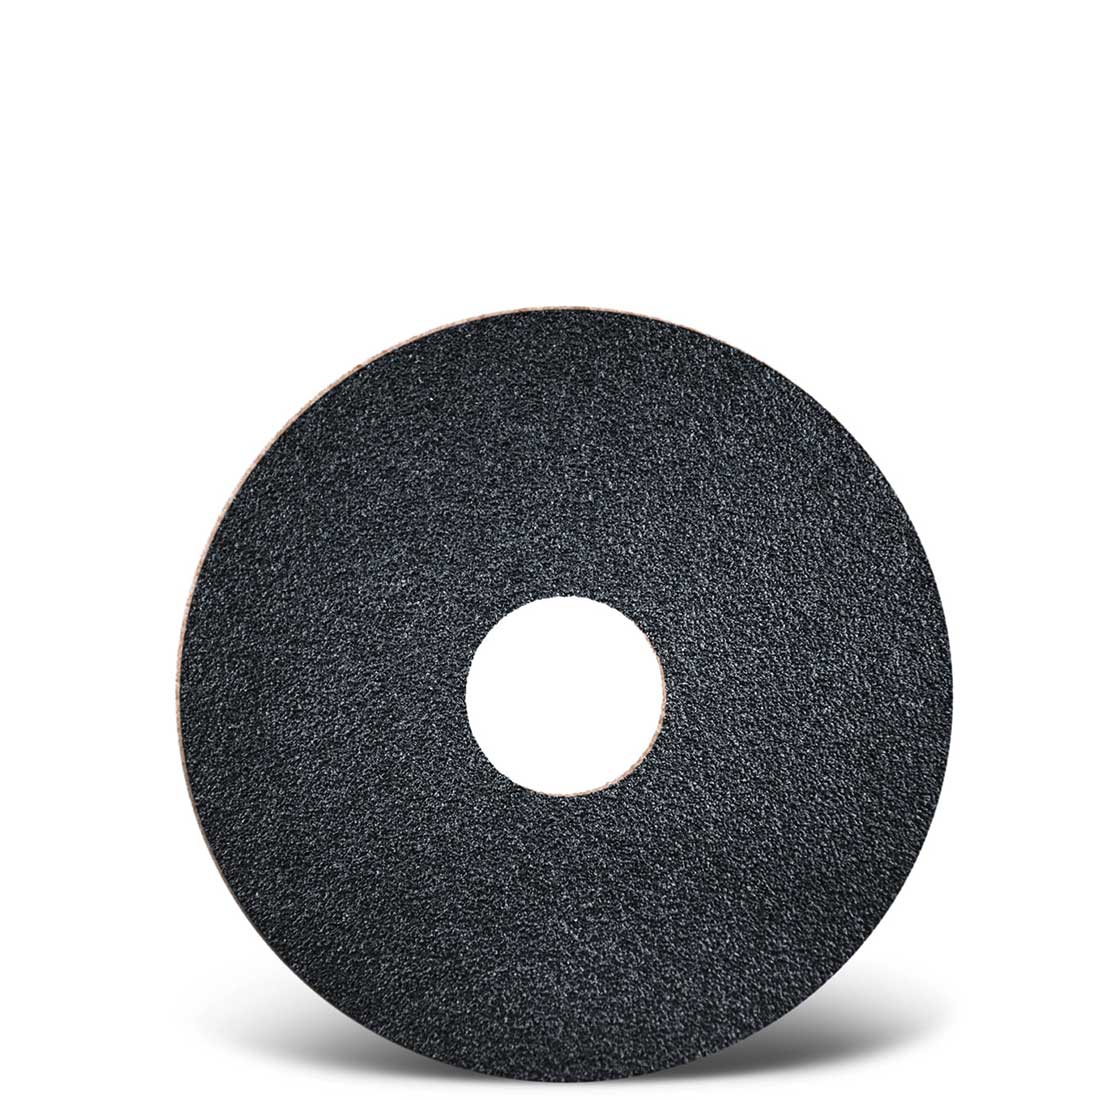 MENZER dual sanding discs for orbital floor sanders, G16–36, Ø 375 mm / doublesided / silicon carbide